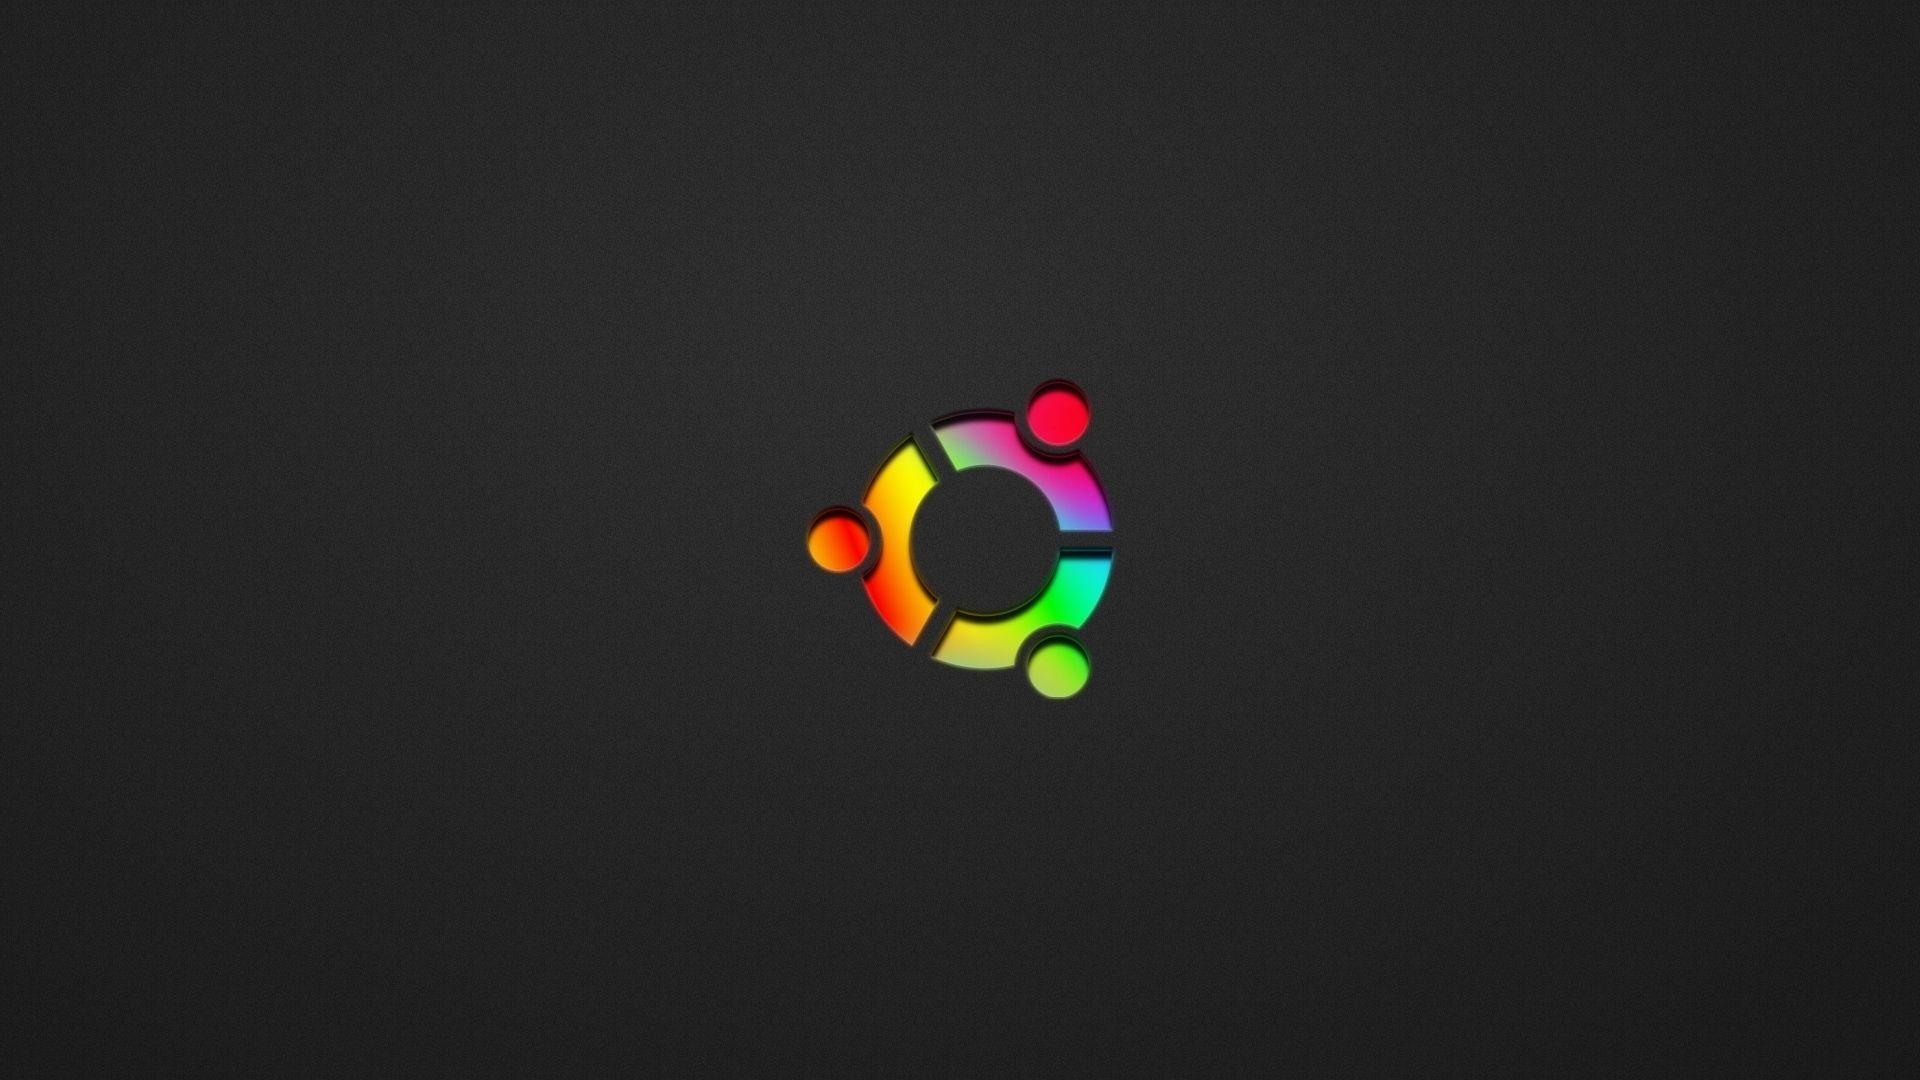 Download Wallpaper 1920x1080 ubuntu, black, rainbow, symbol Full HD